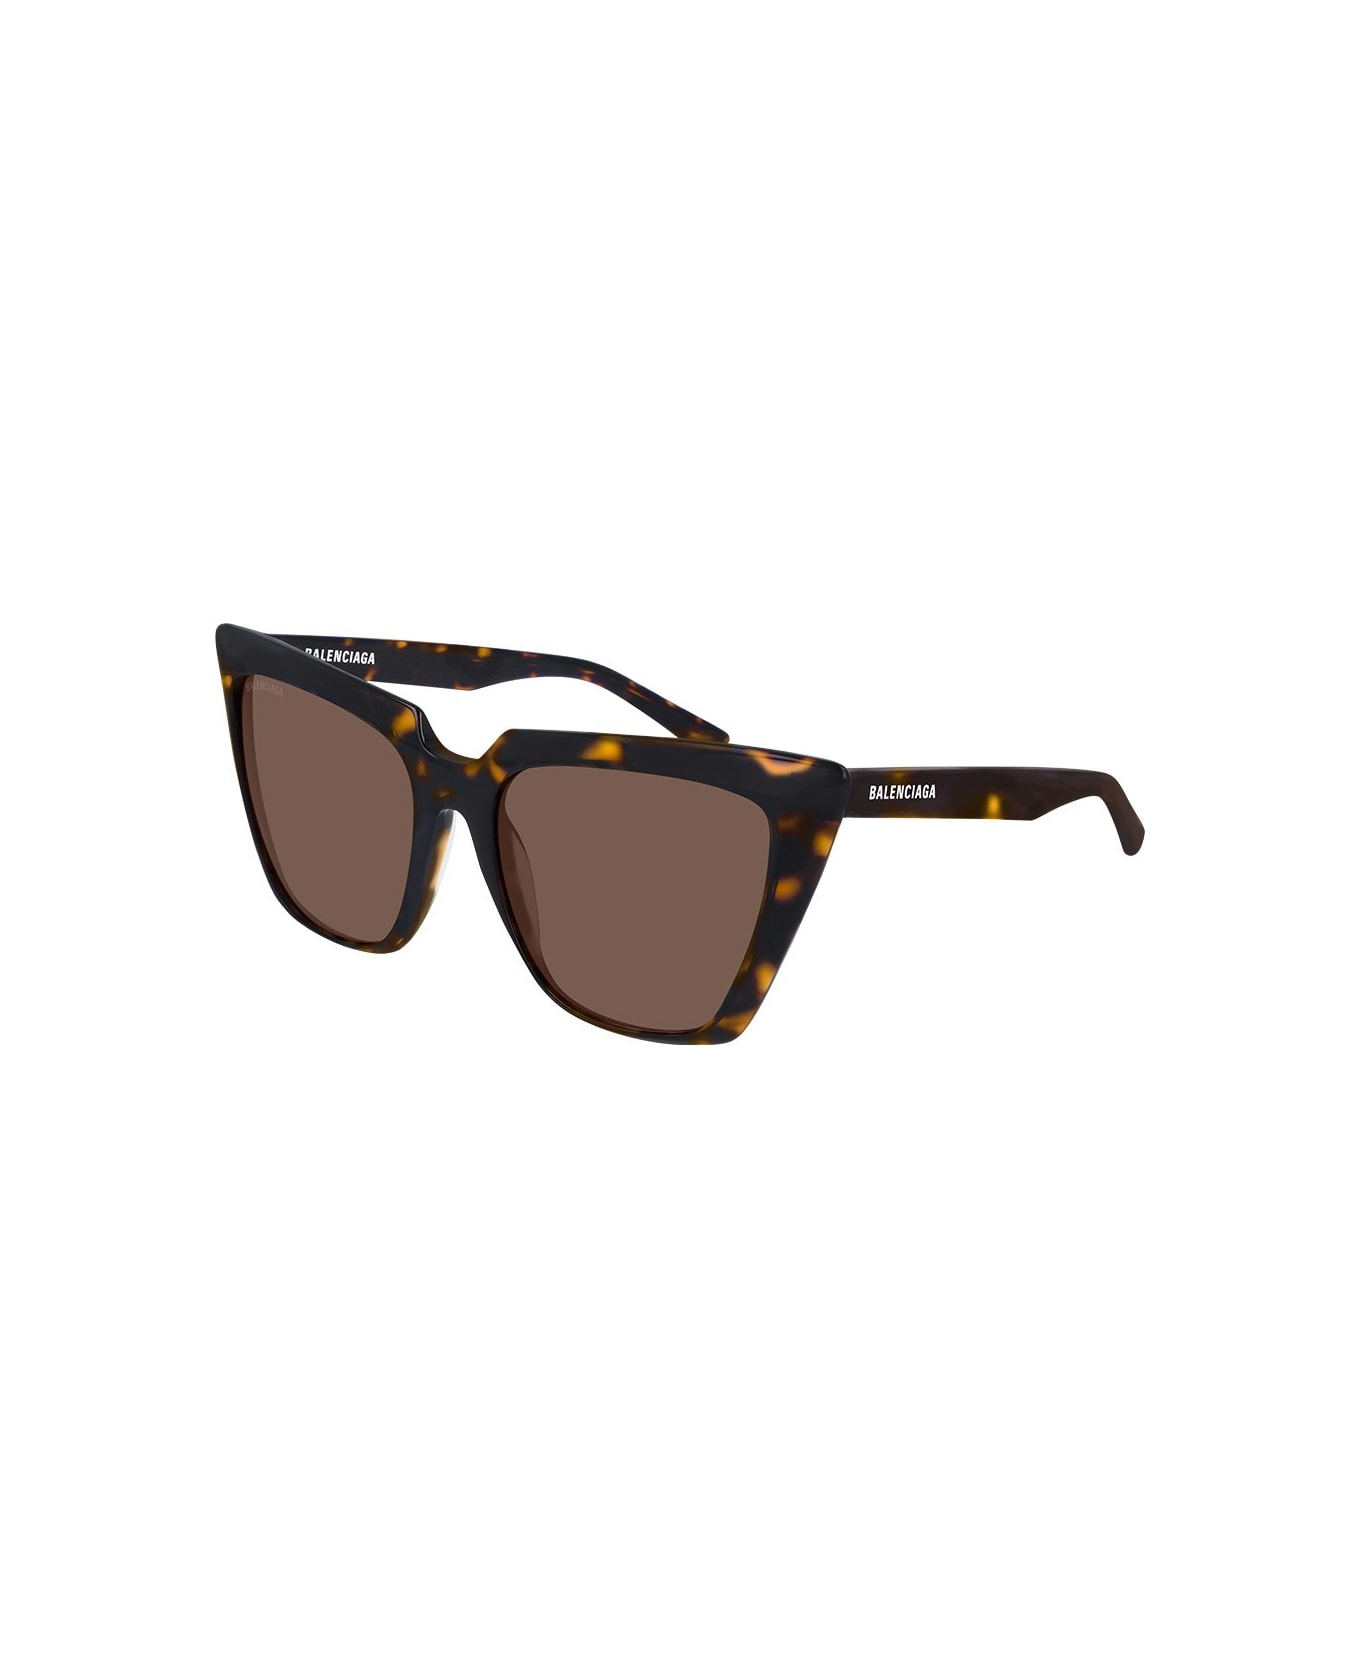 Balenciaga Eyewear Bb0046s Sunglasses - 002 HAVANA HAVANA BROWN サングラス